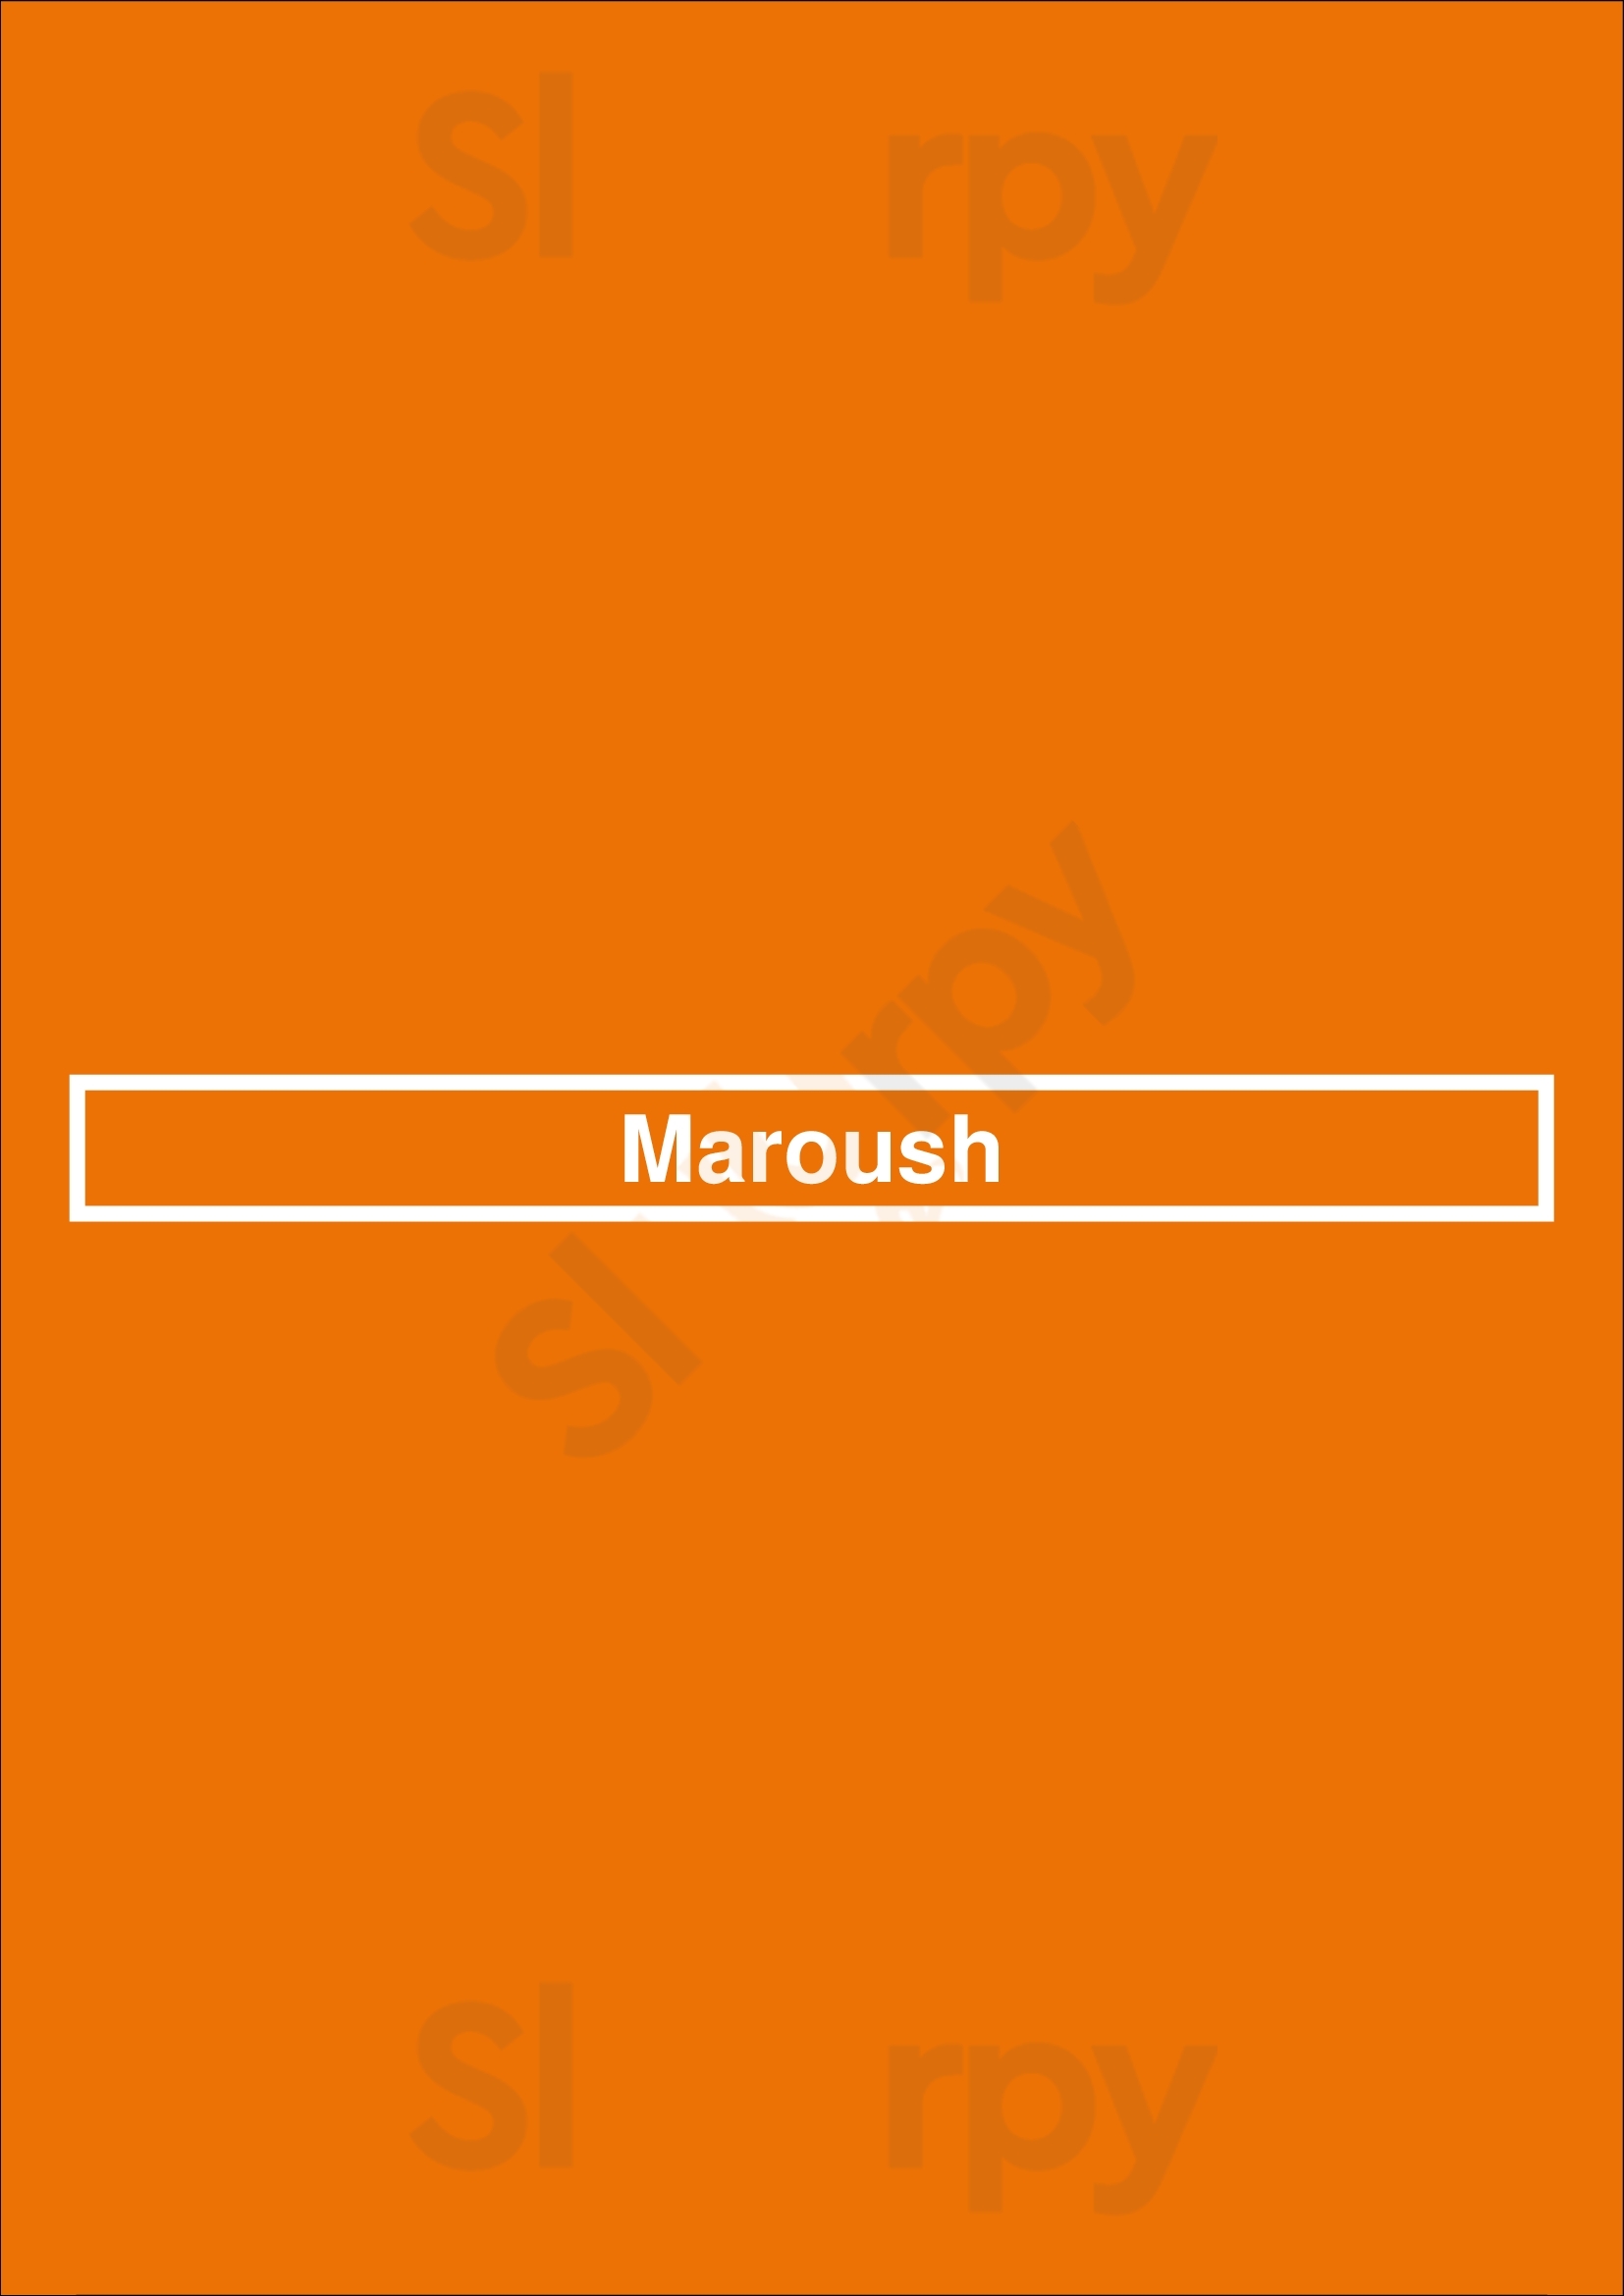 Maroush London Menu - 1